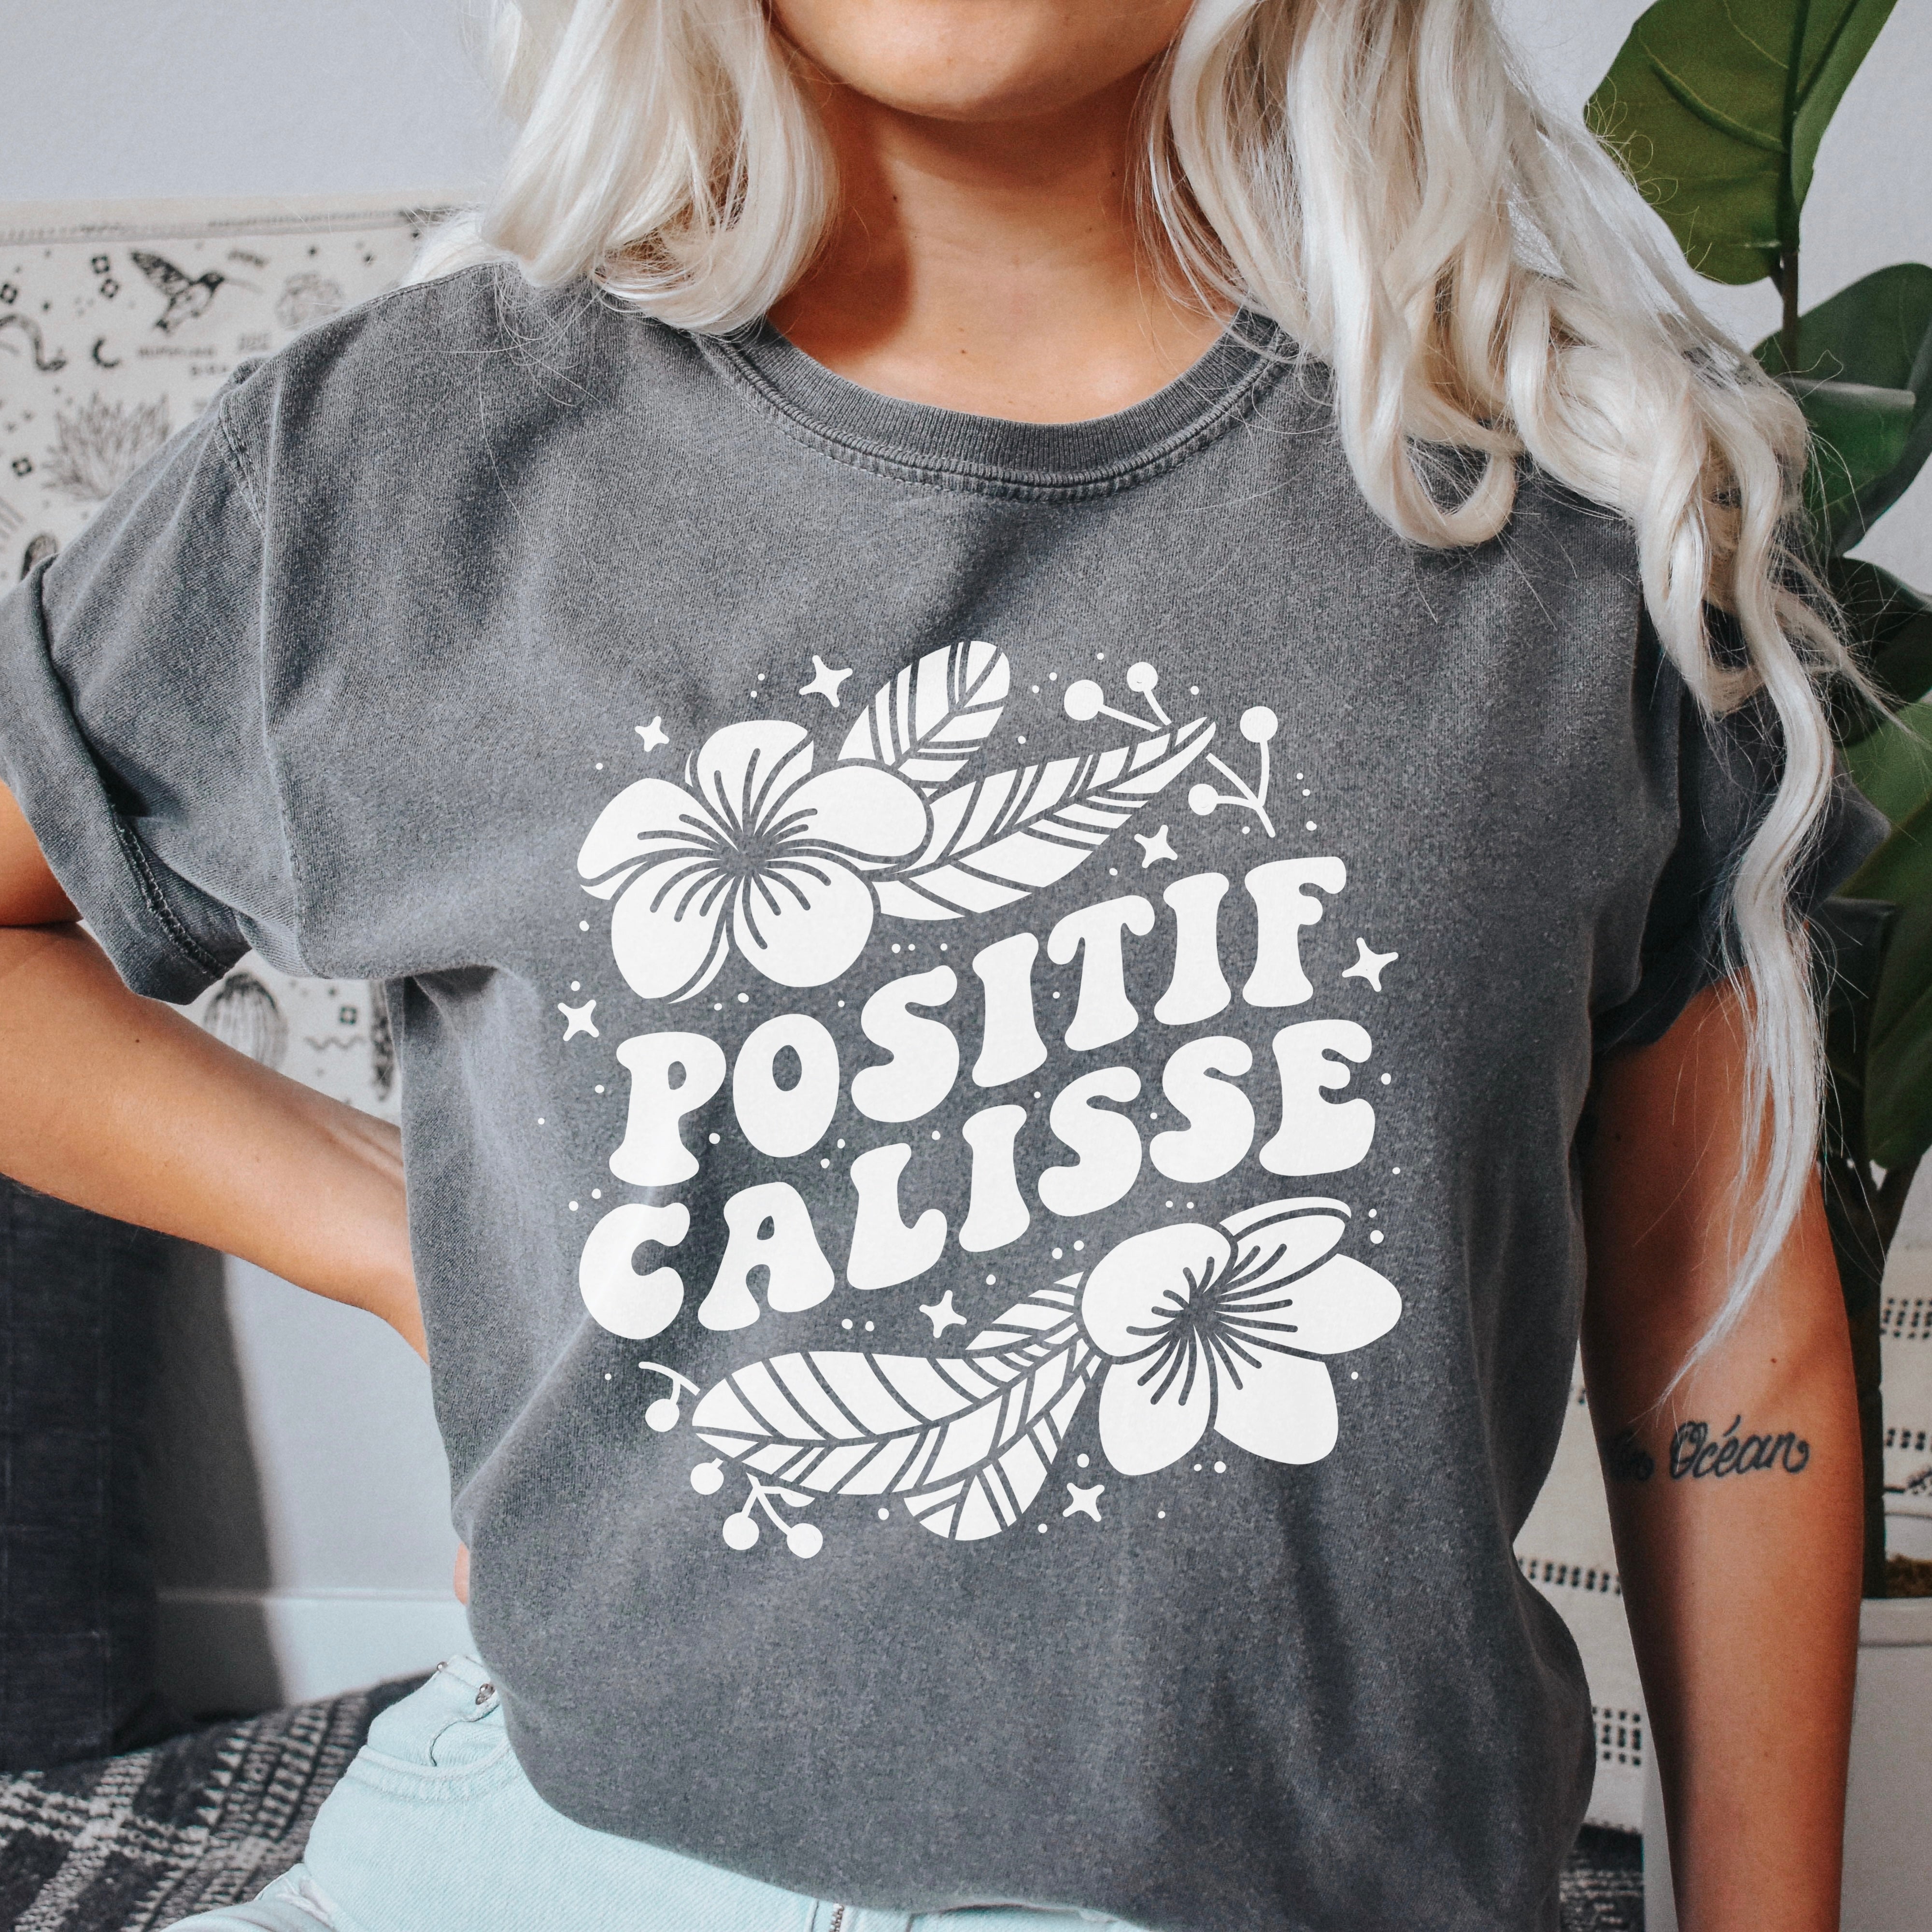 Positif Calisse Tshirts